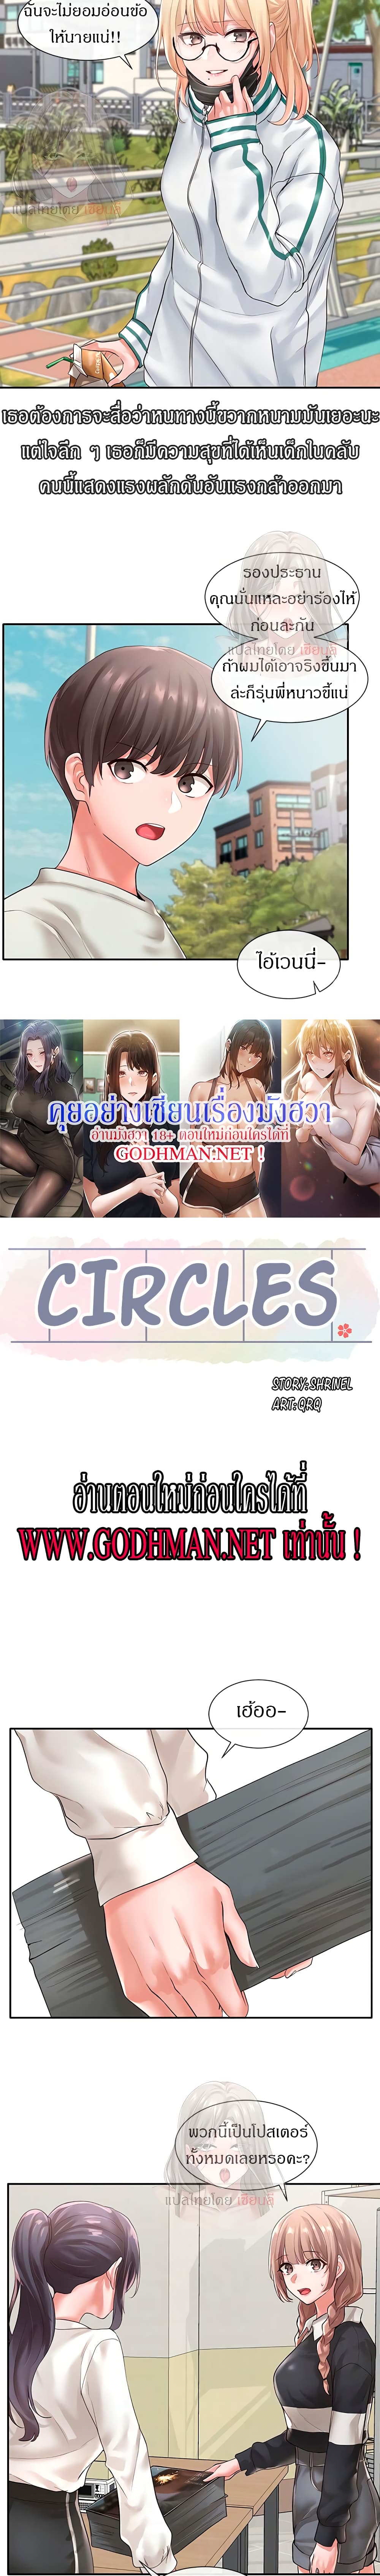 Theater-Society-Circles-51_09.jpg